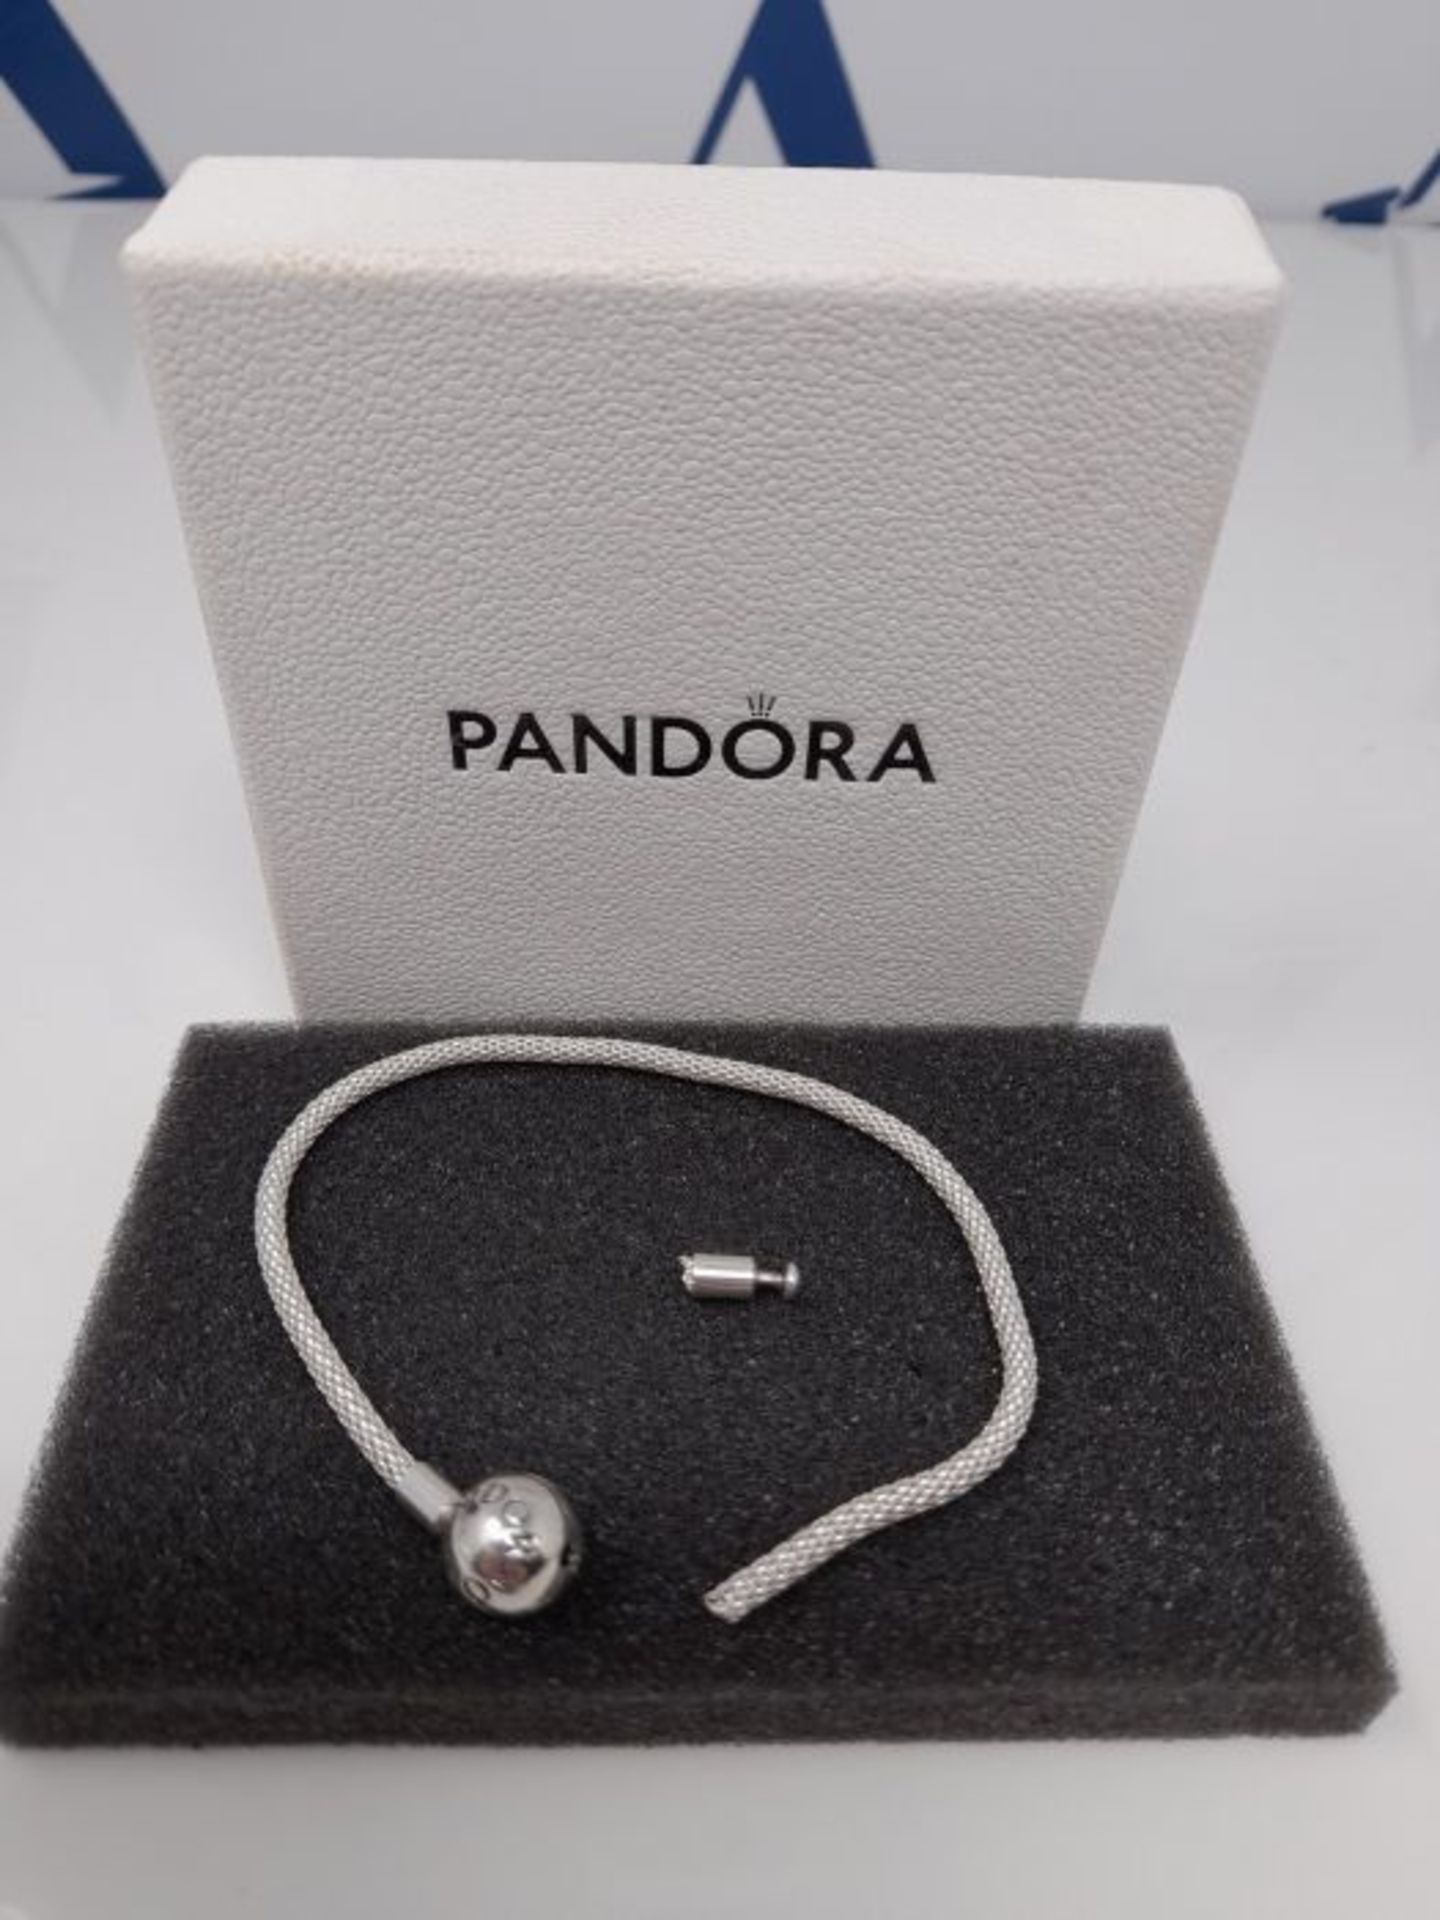 [CRACKED] Pandora Rigid Bracelet 596543-19 Woman Silver Moments maya - Image 2 of 3